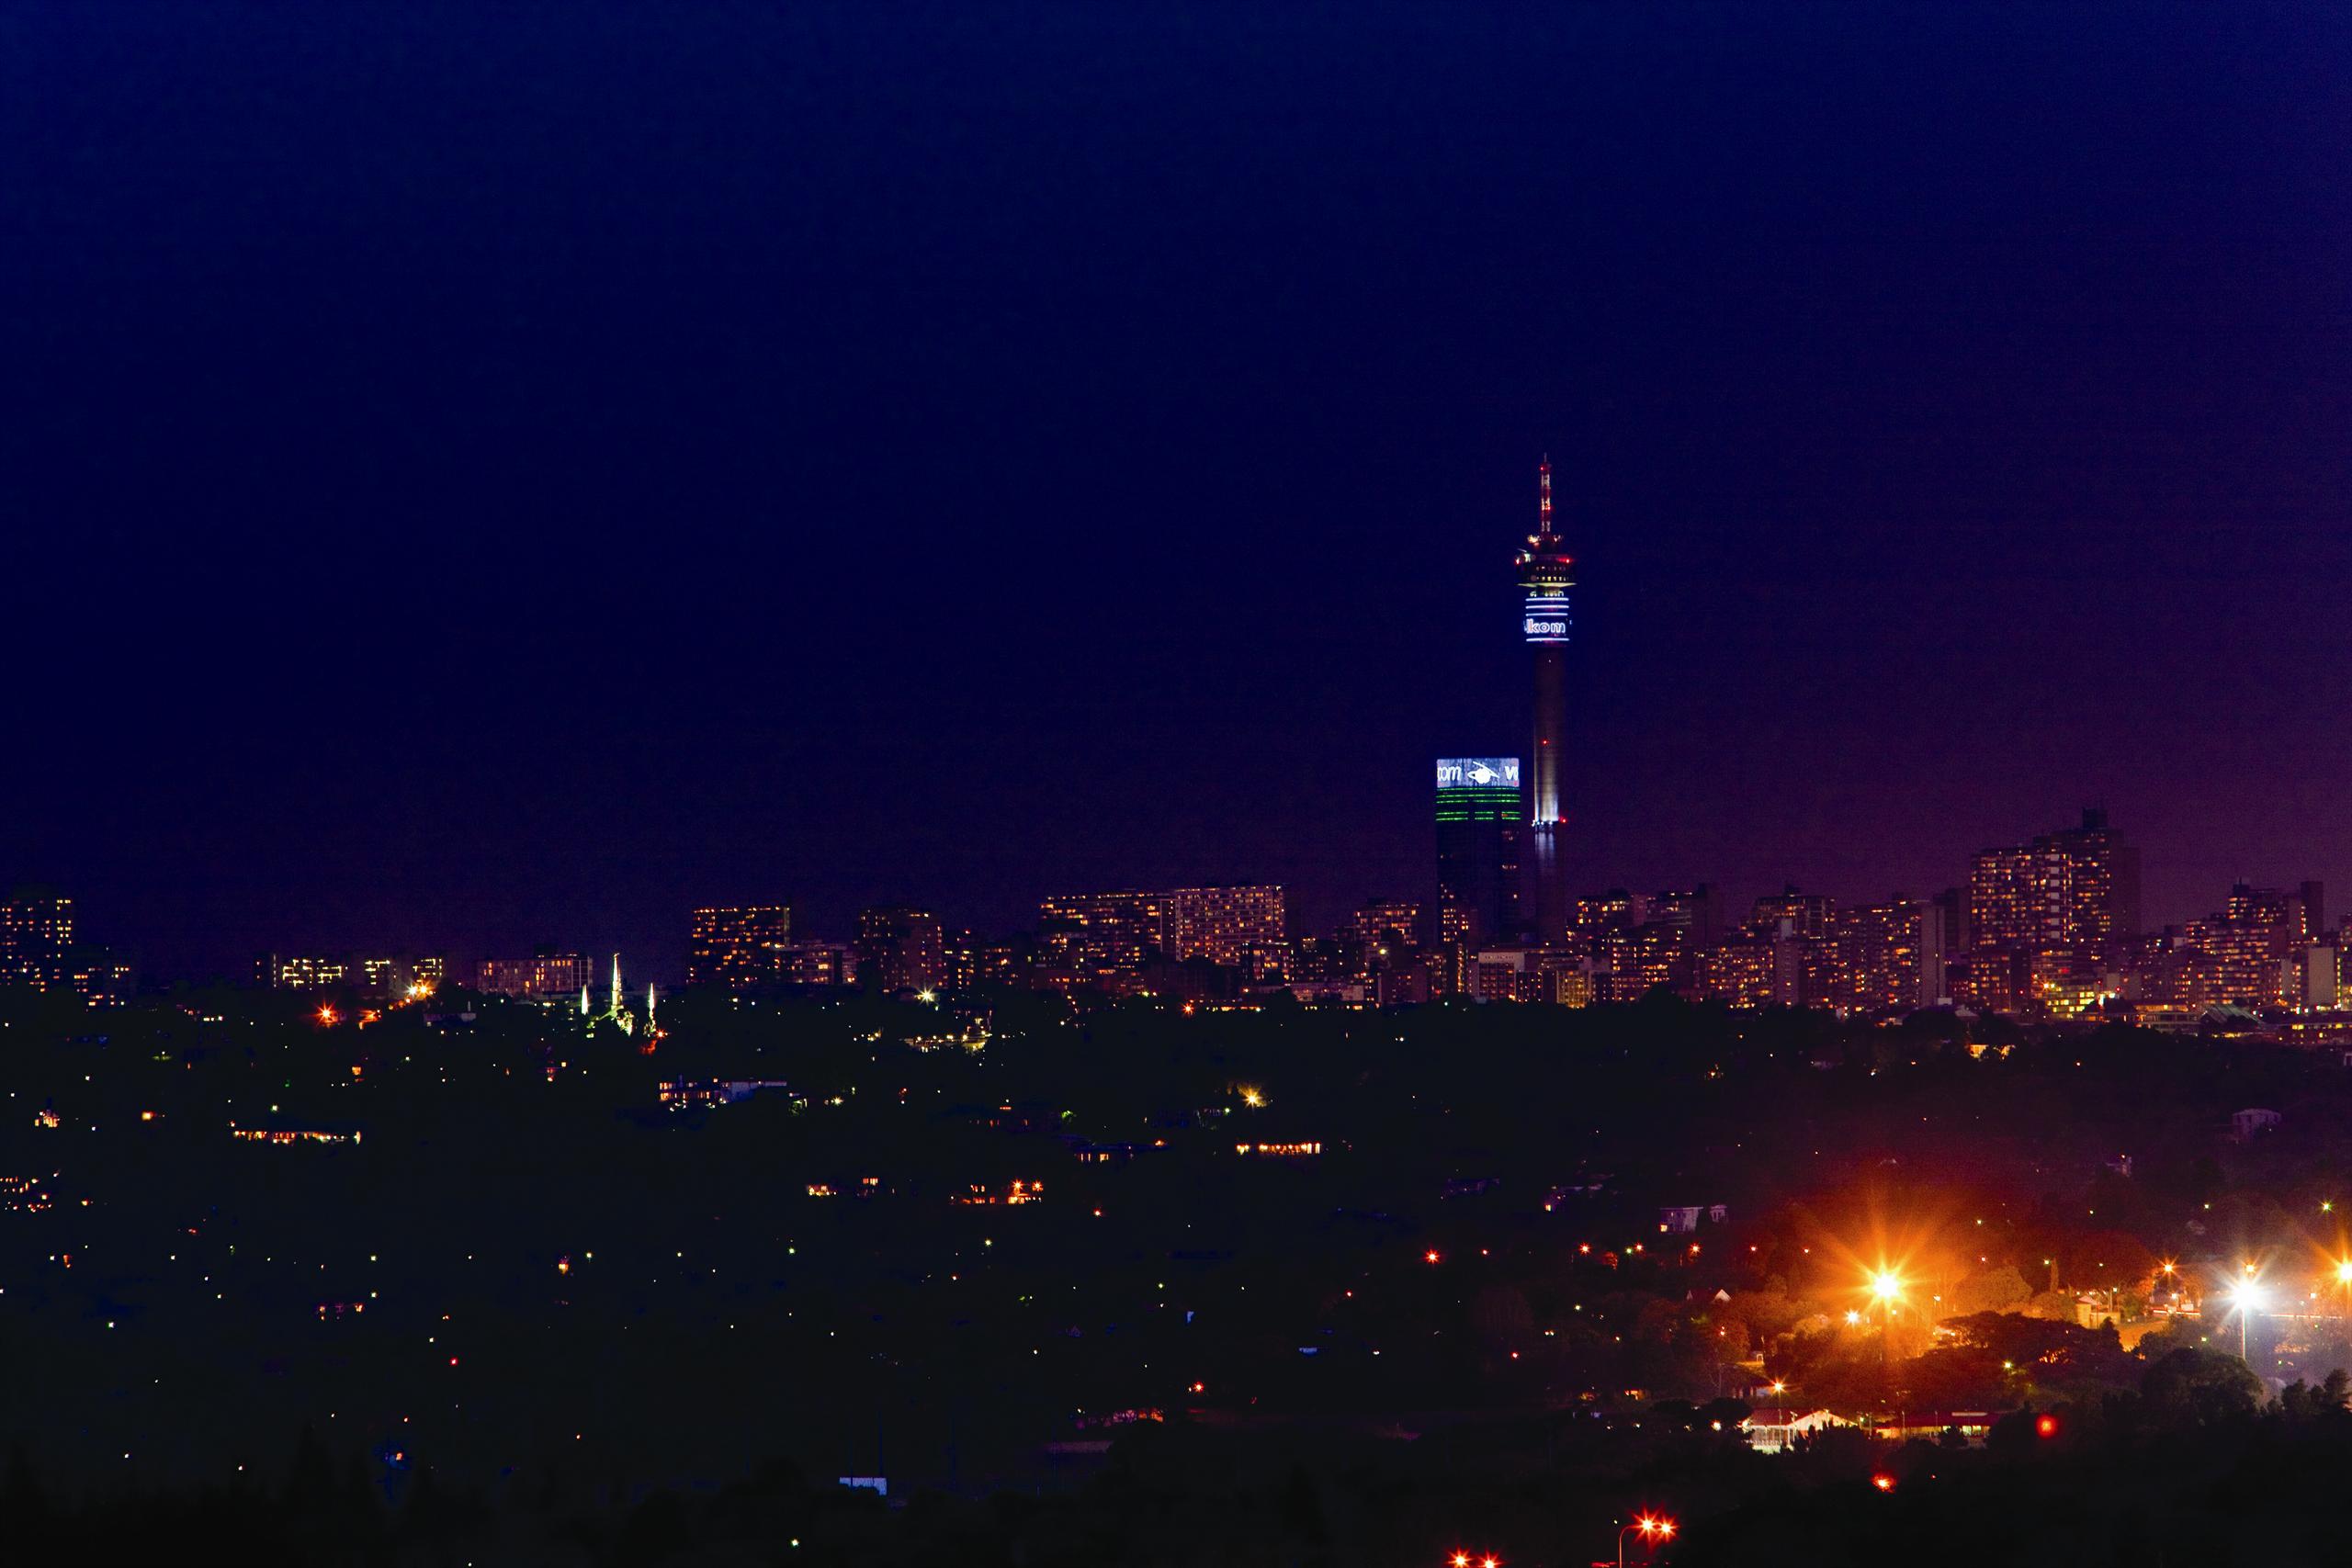 Johannesburg broadband tower